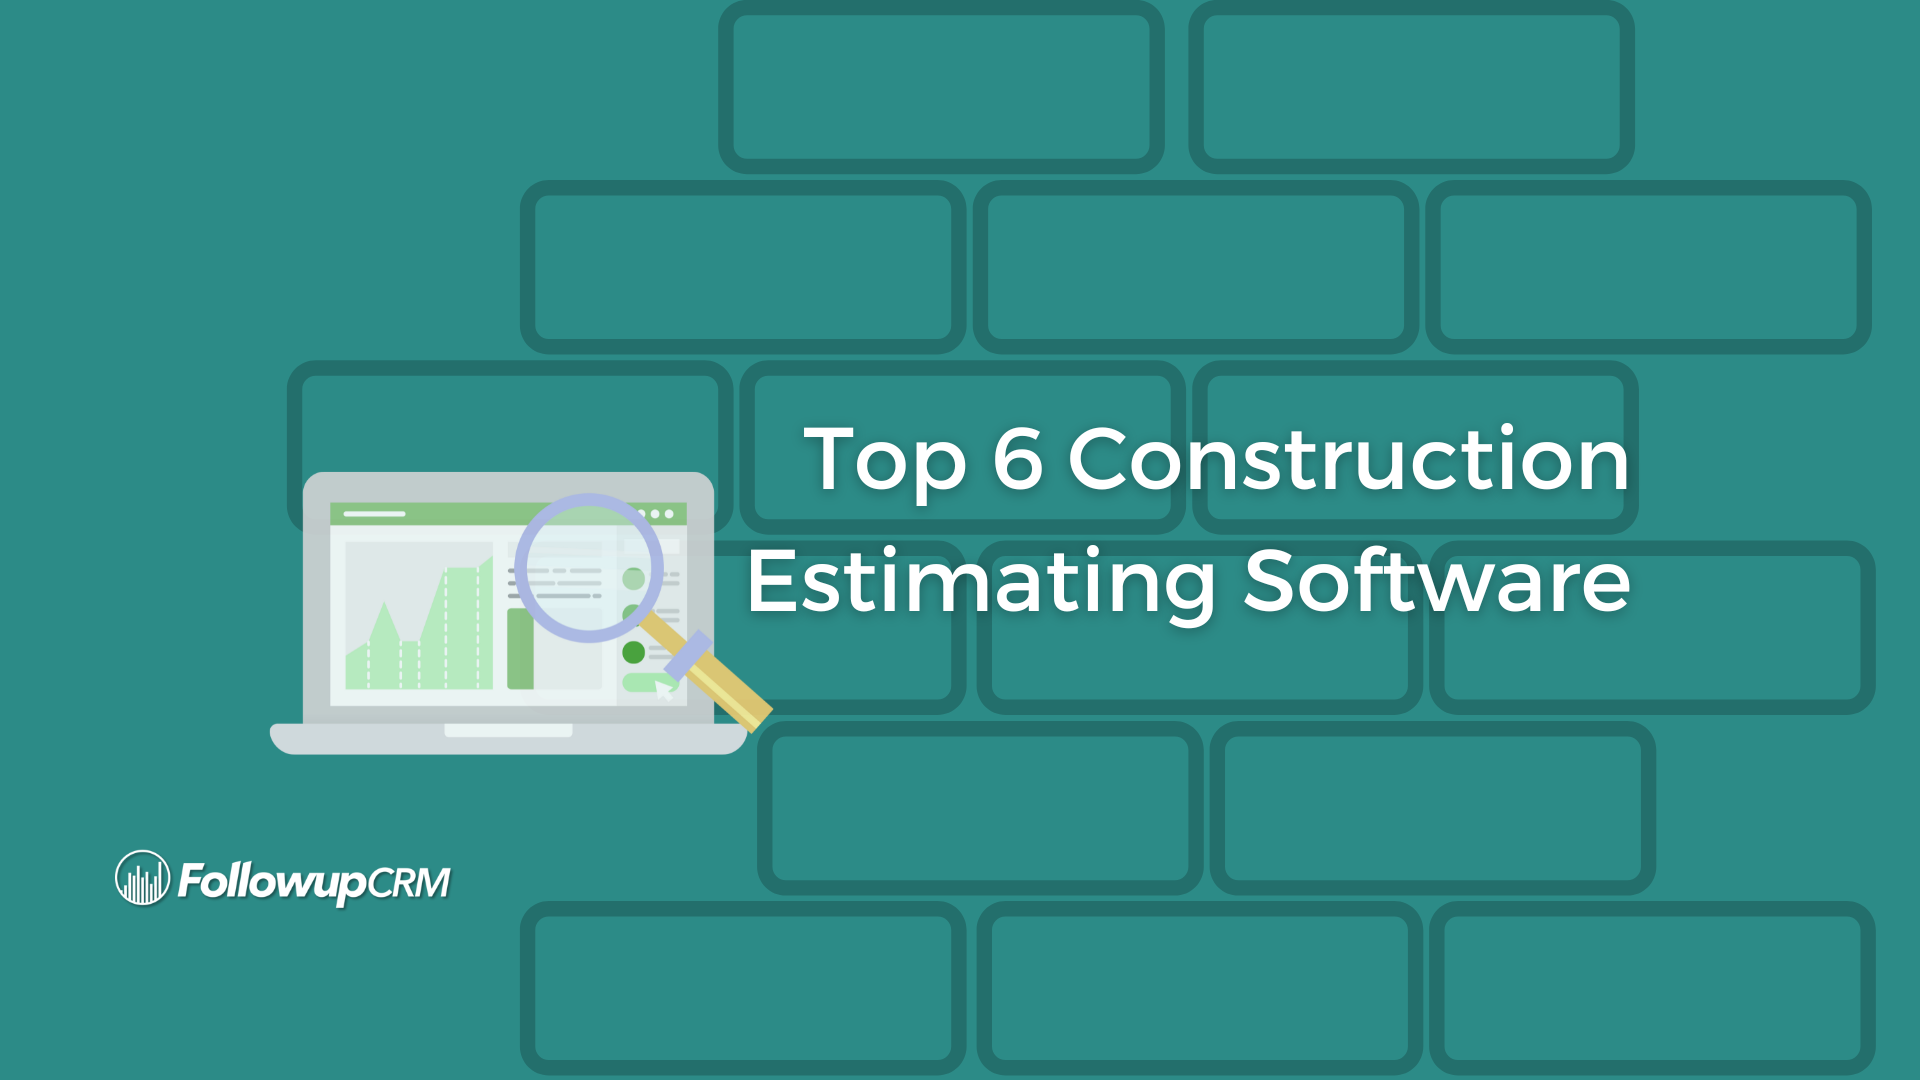 Top 6 Construction Estimating Software